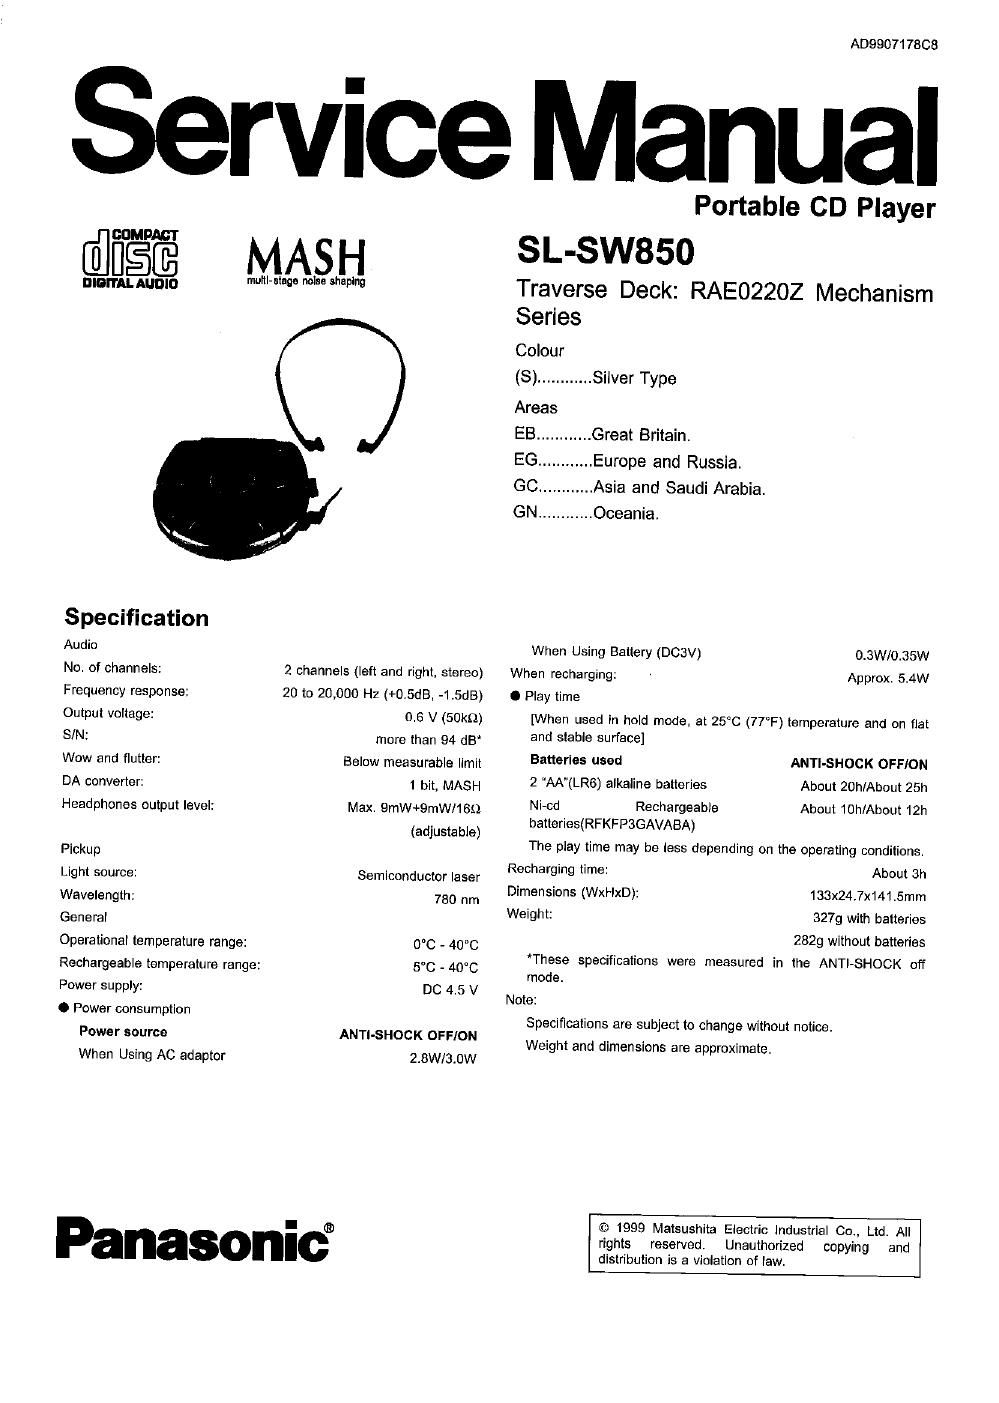 panasonic sl sw 850 service manual